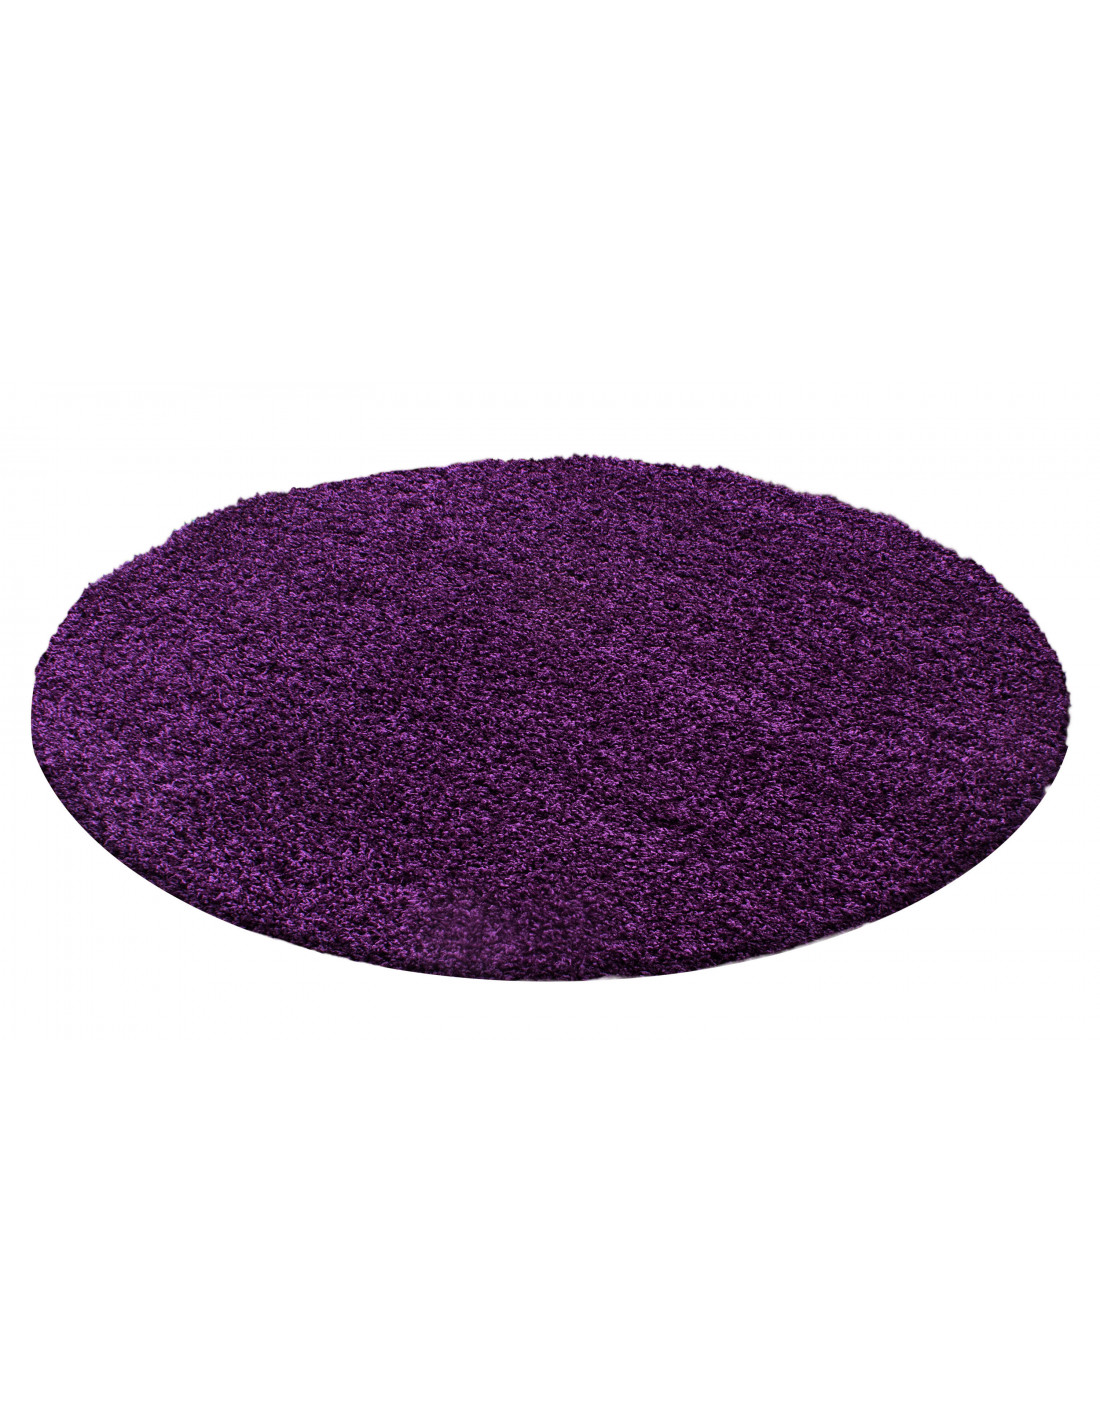 Shaggy carpet, high pile, long pile, living room shaggy, pile height 3cm, plain purple